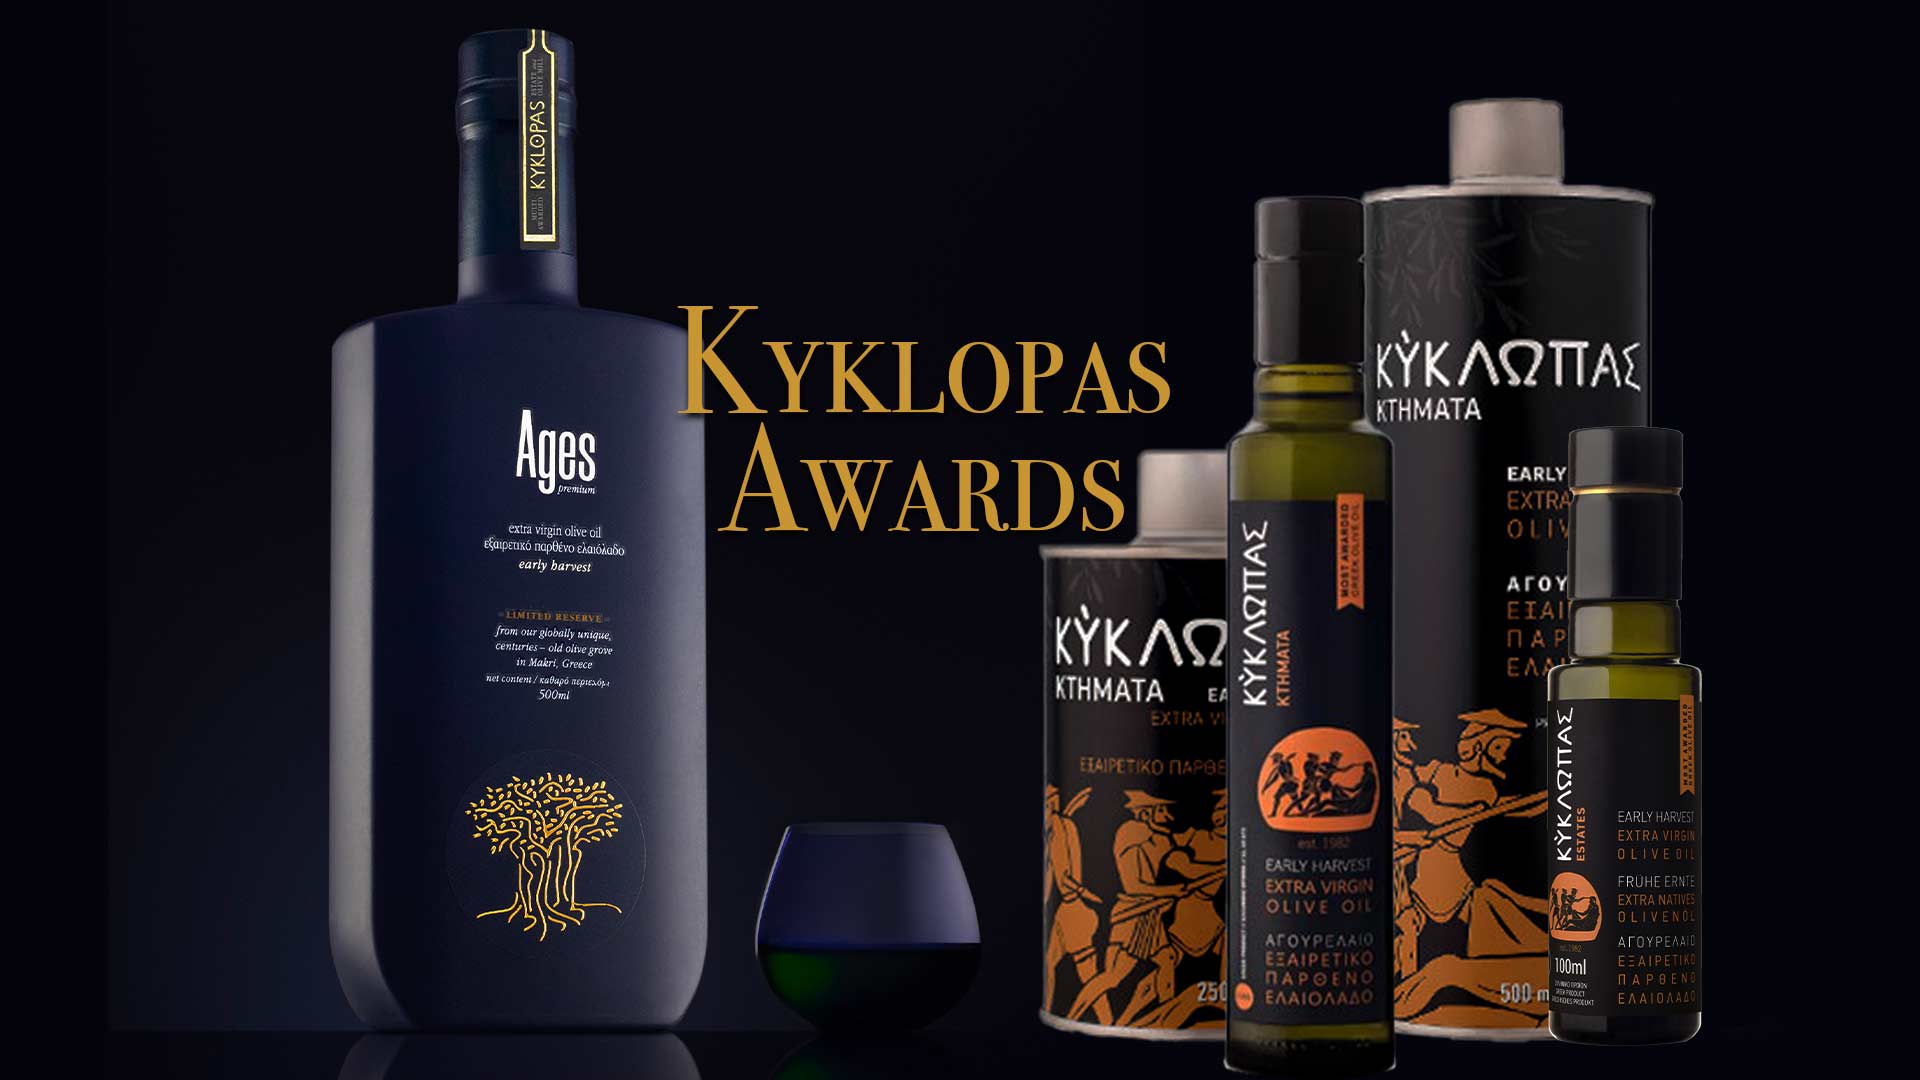 Kyklopas Awards